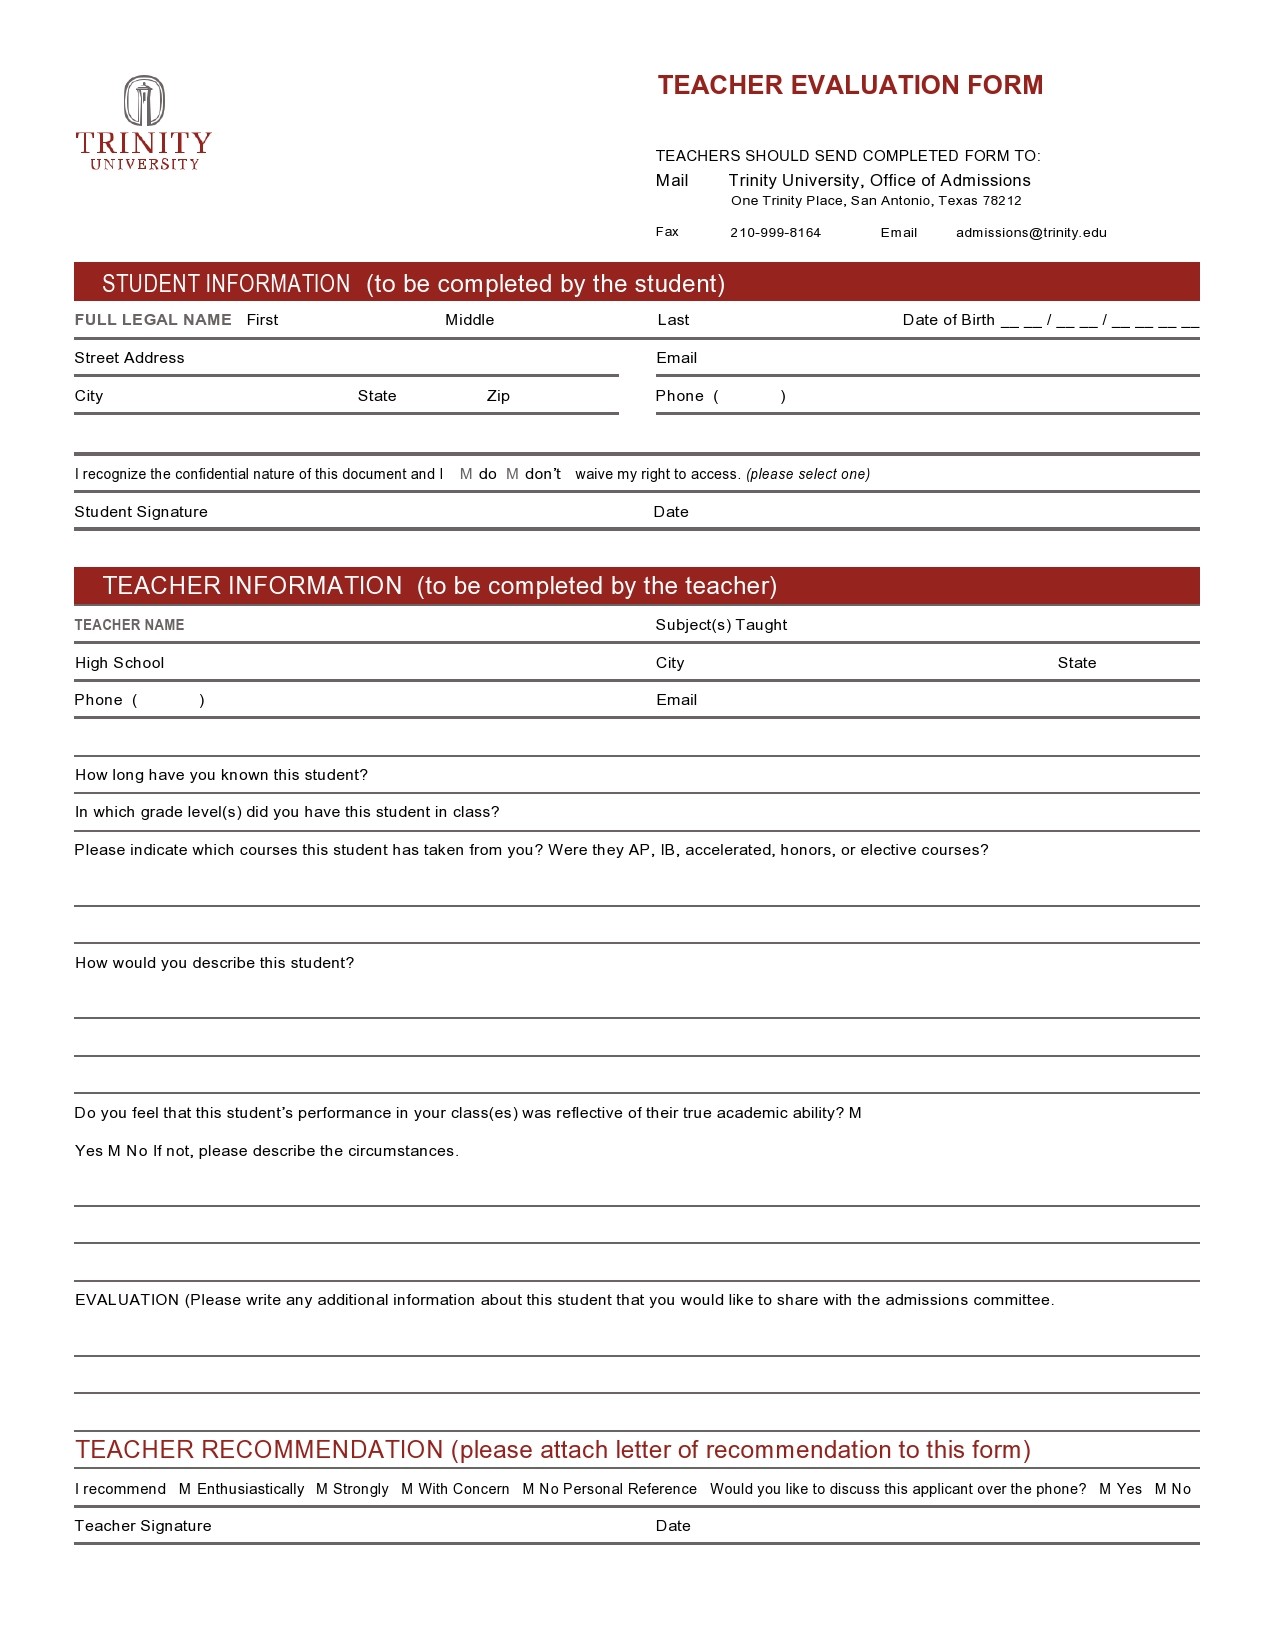 Free teacher evaluation form 30